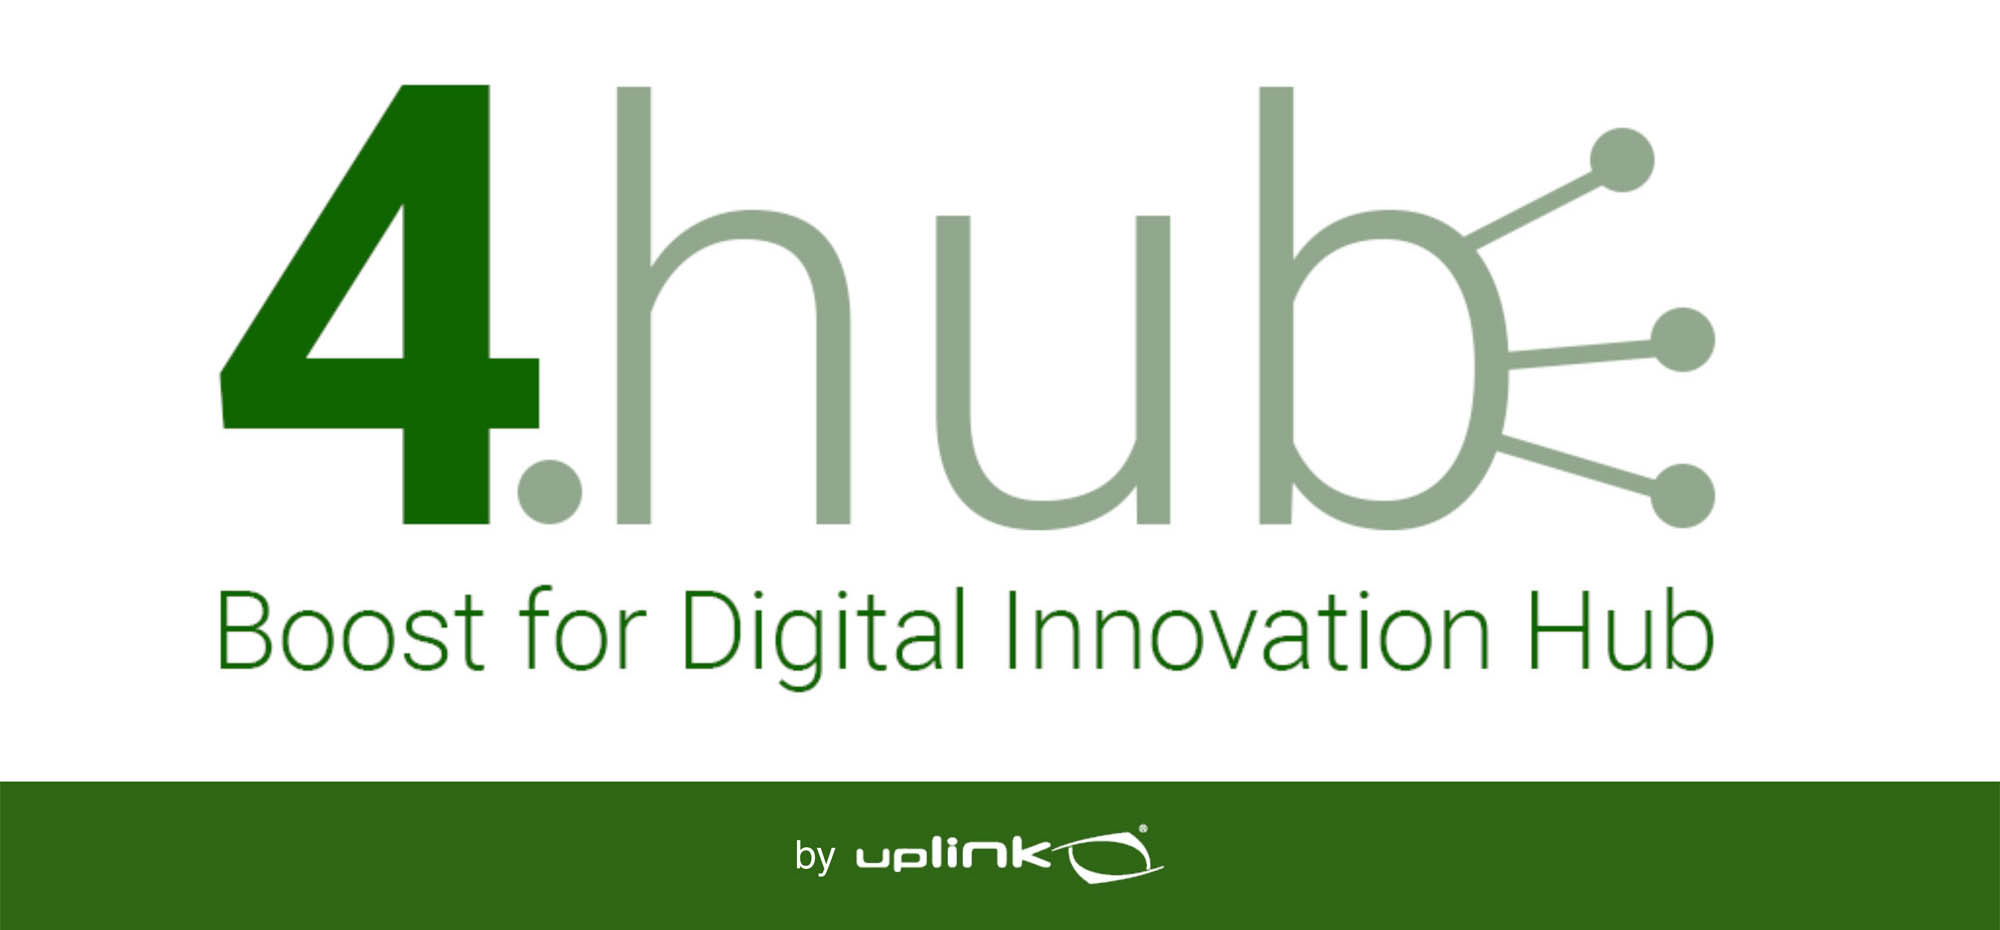 4hub2017 Boost for Digital Innovation Hub